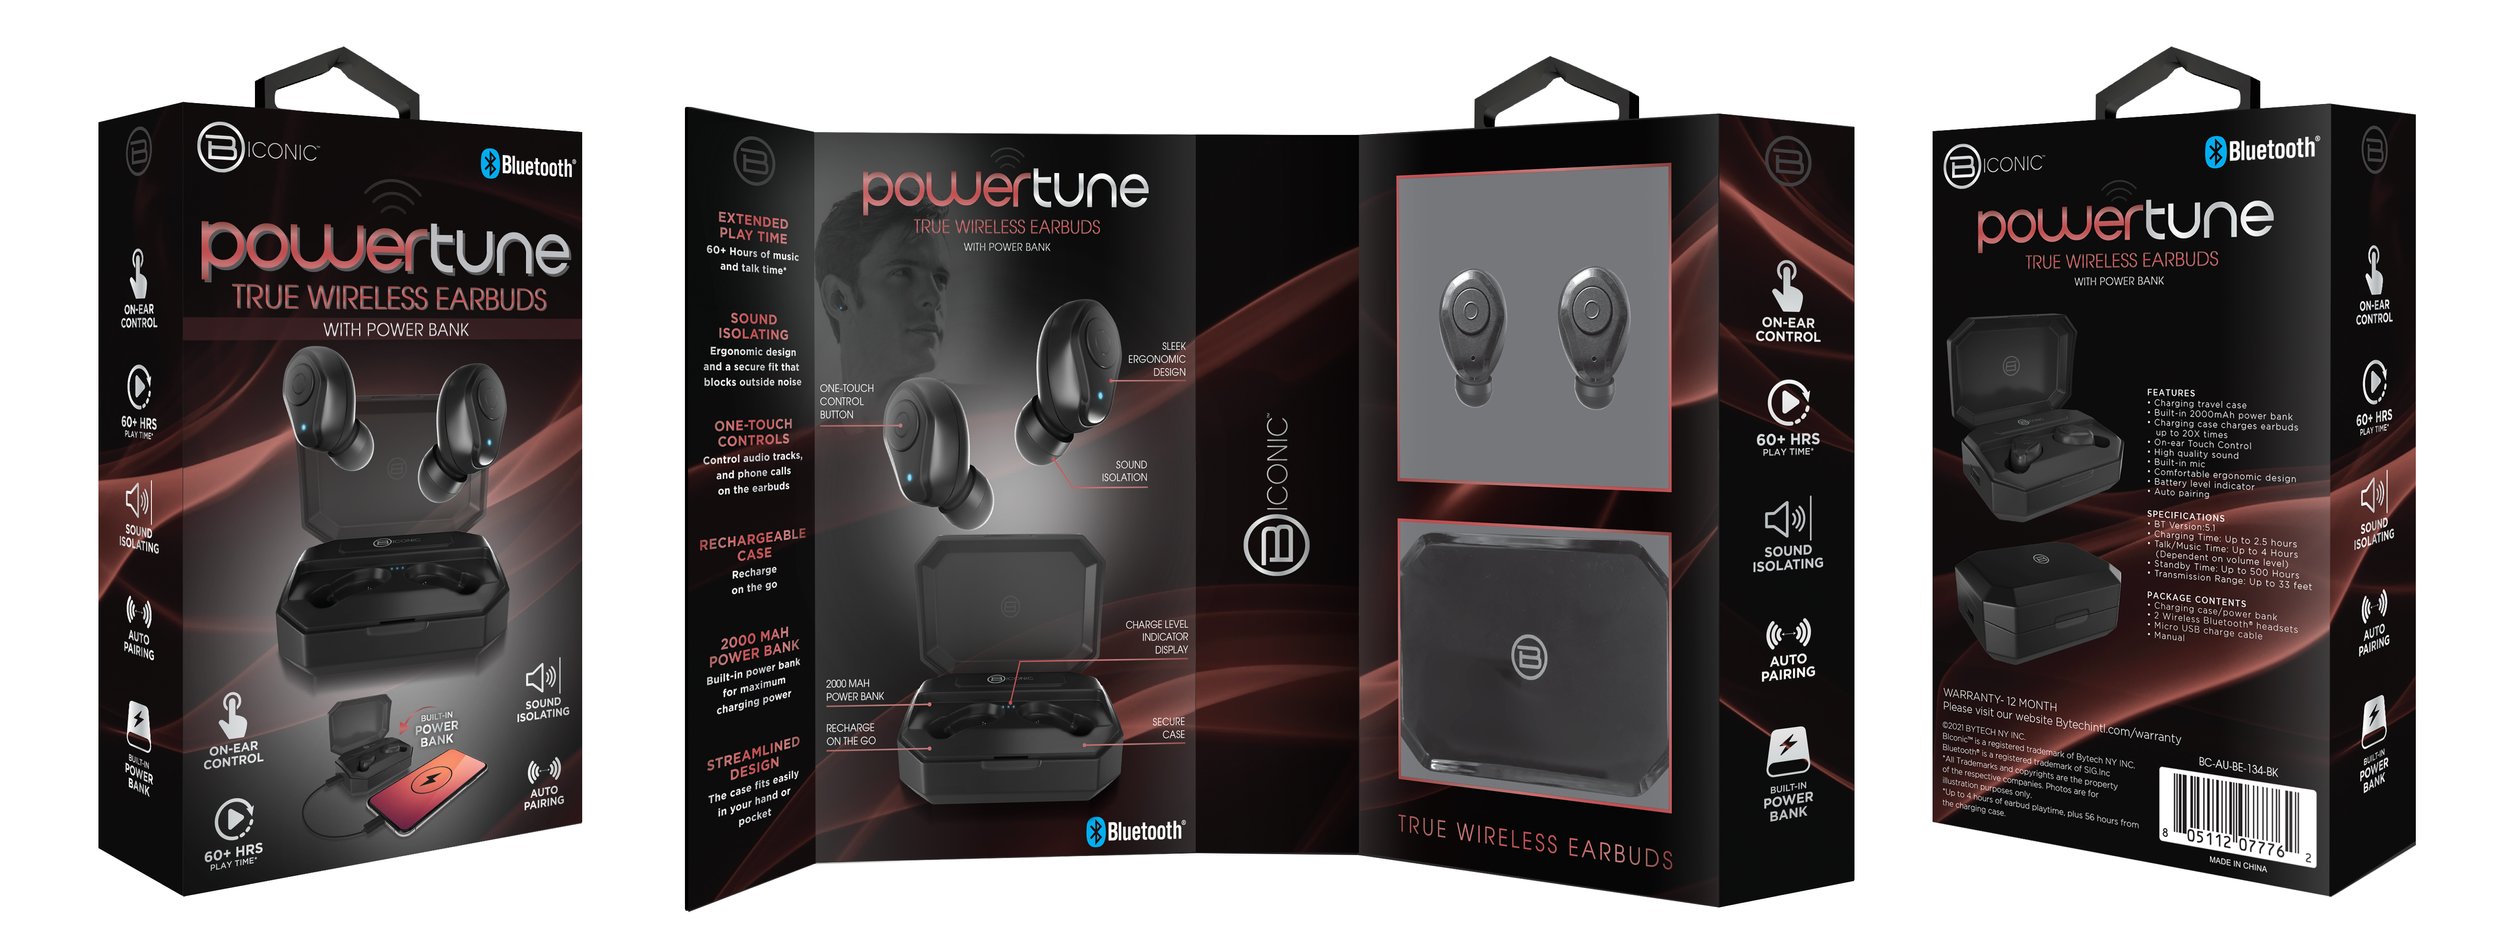 Biconic powertune true wireless earbuds case